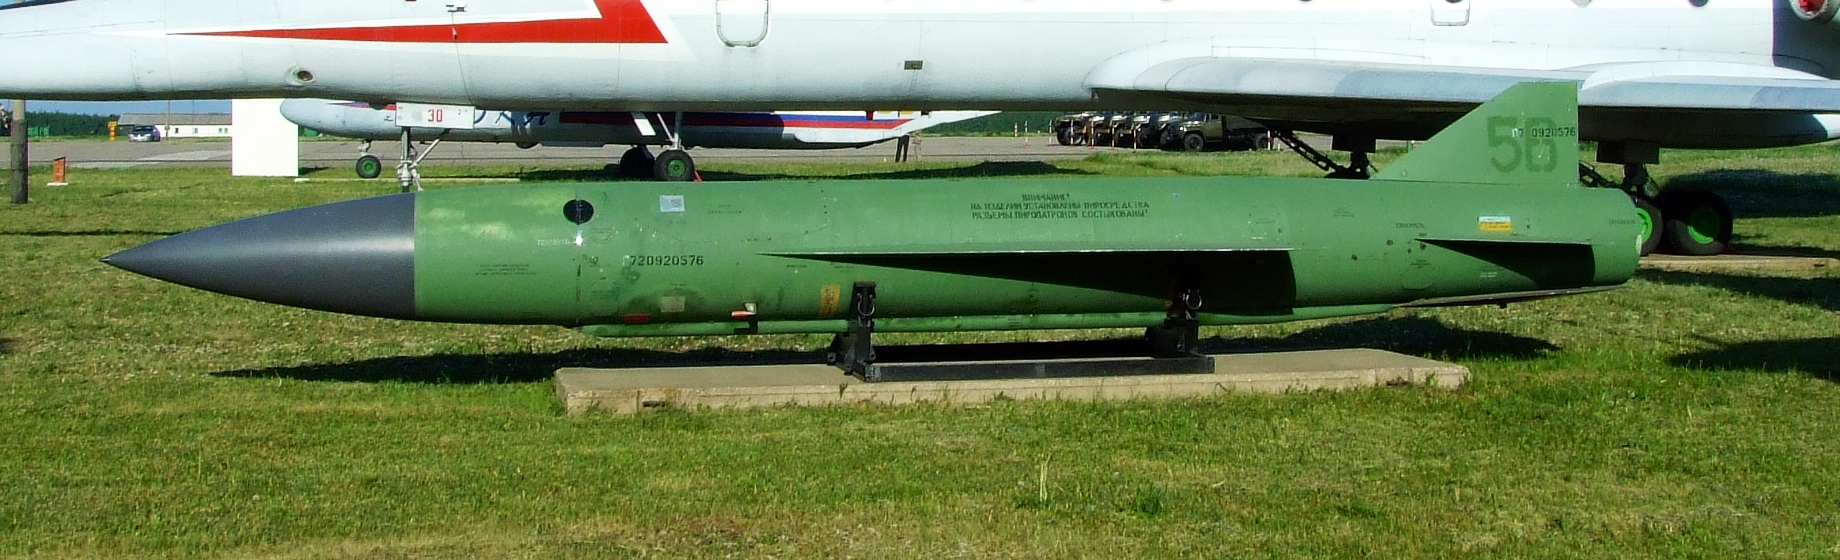 Misil Kh-22 (Wikimedia Commons)